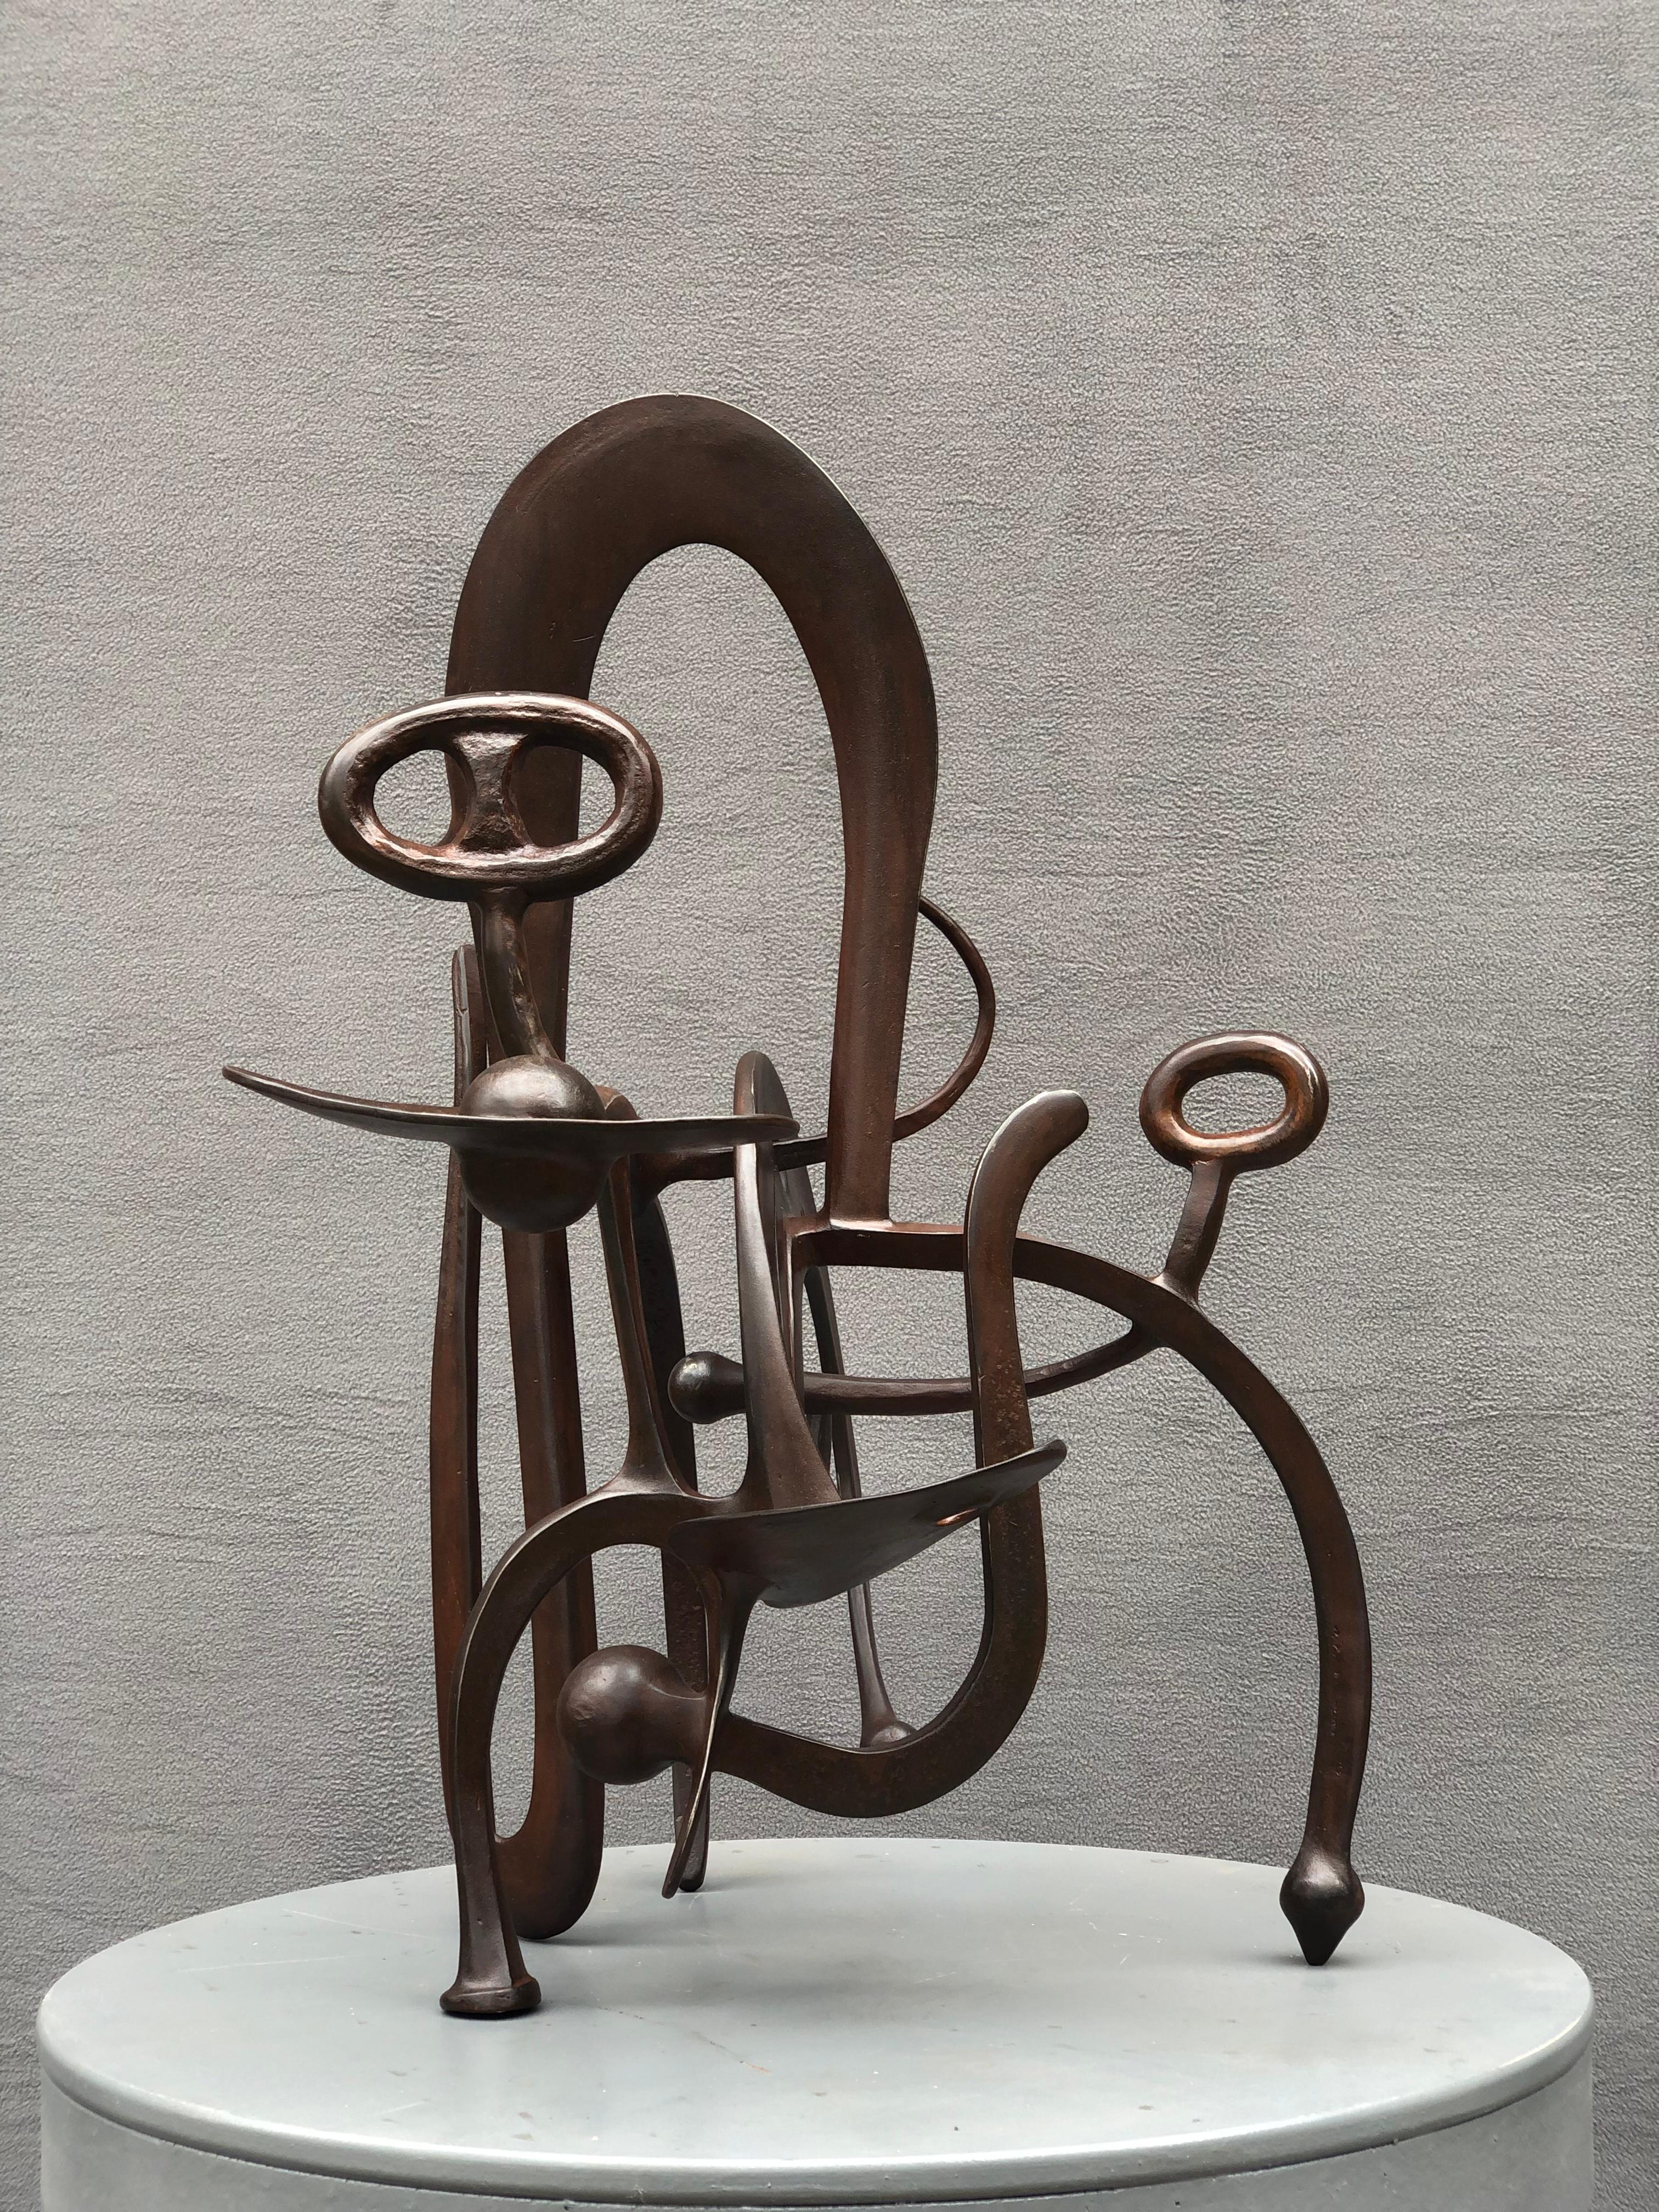 Abstract Sculpture Nick Taylor - AT&T